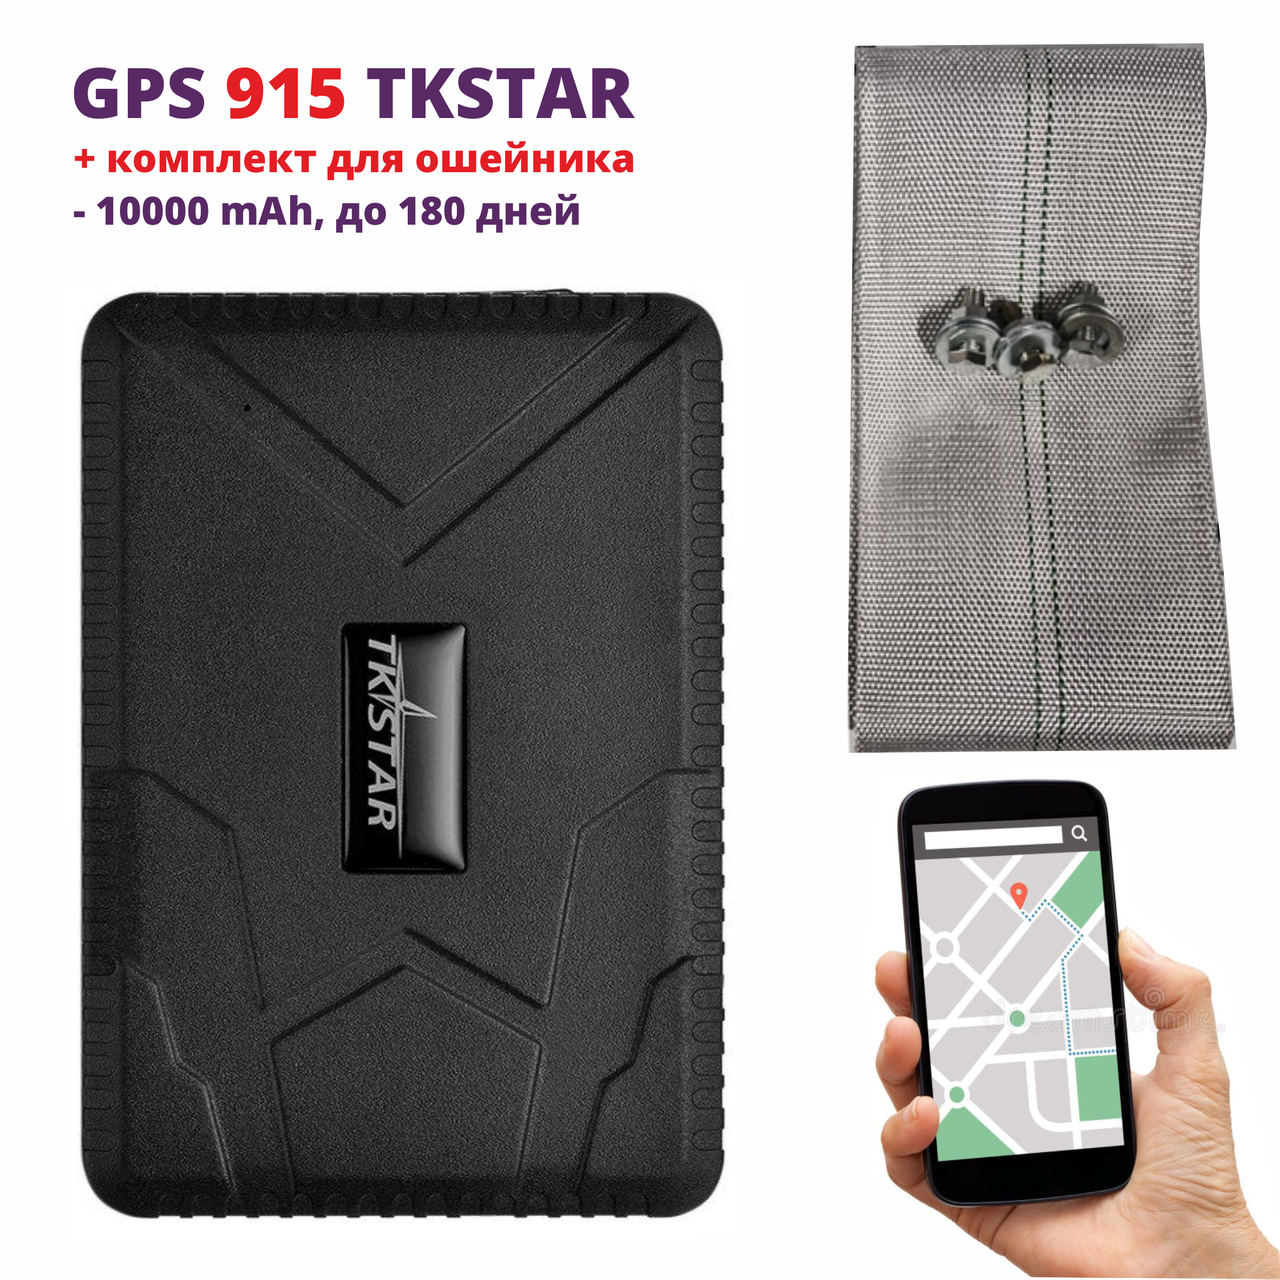 GPS трекер 915 TKSTAR для лошадей, КРС, транспорта, авто 10000 mAh gps tracker, sim на магните с ошейником